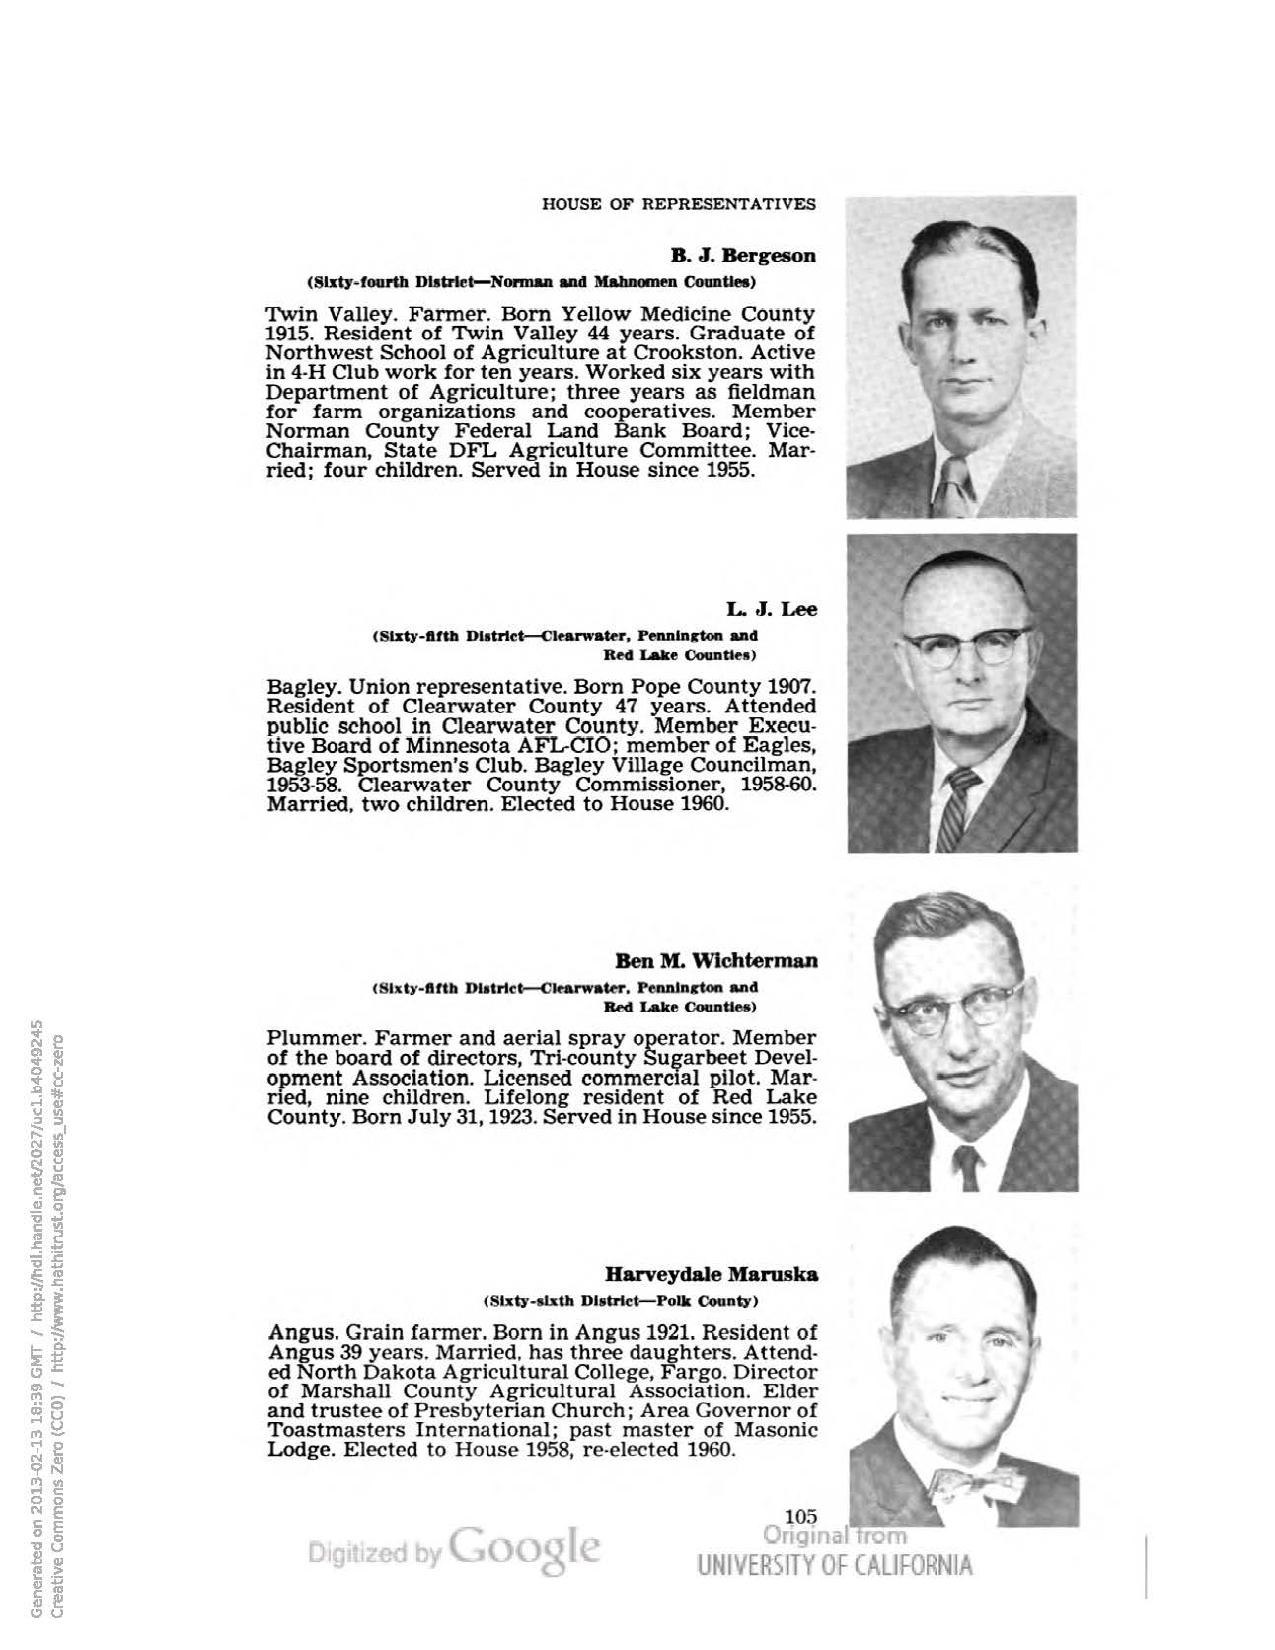 File:The Minnesota legislative manual. 1961-1962.pdf - Wikipedia